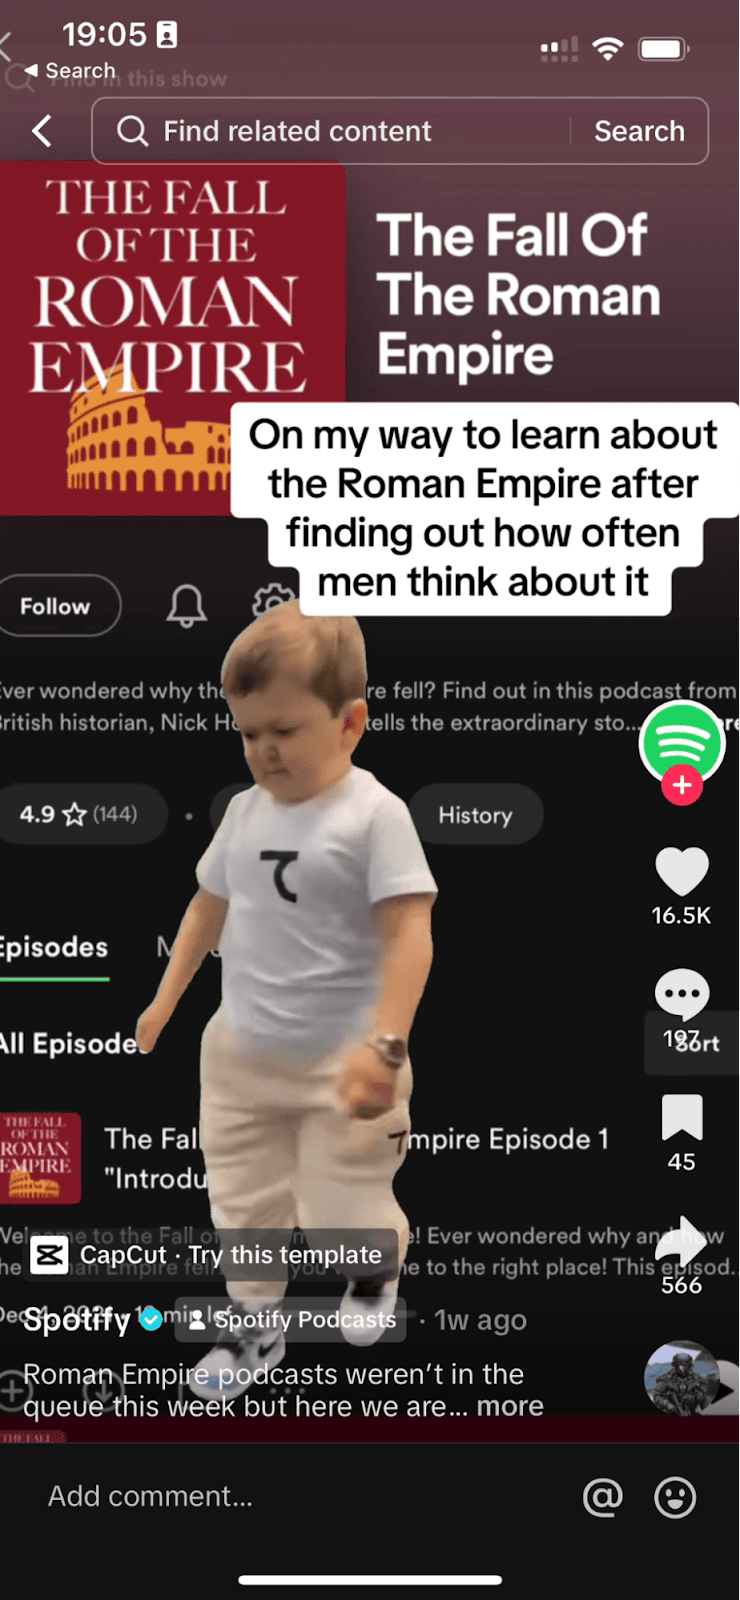 Spotify's TikTok post about Roman Empire podcasts